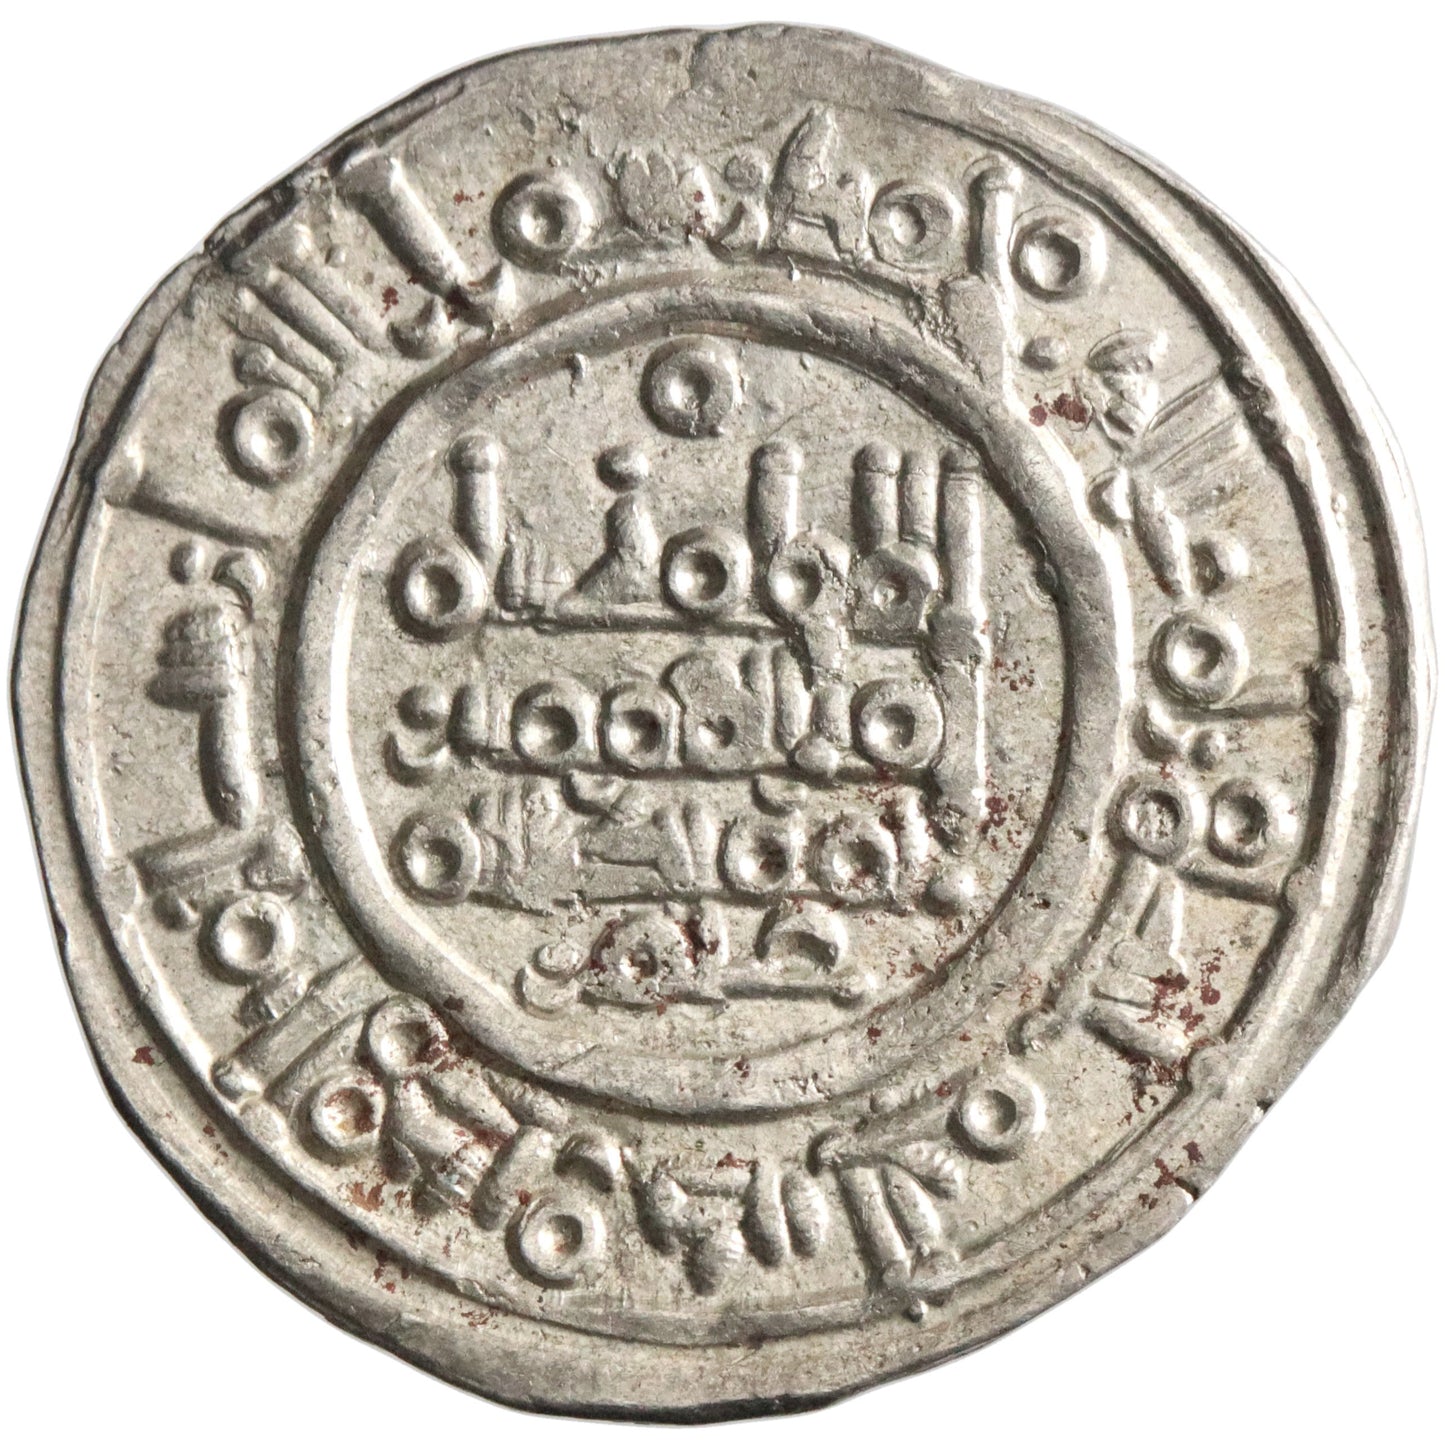 Umayyad of Spain, Hisham II, silver dirham, al-Andalus (Spain) mint, AH 392, citing Tamlij and 'Amir